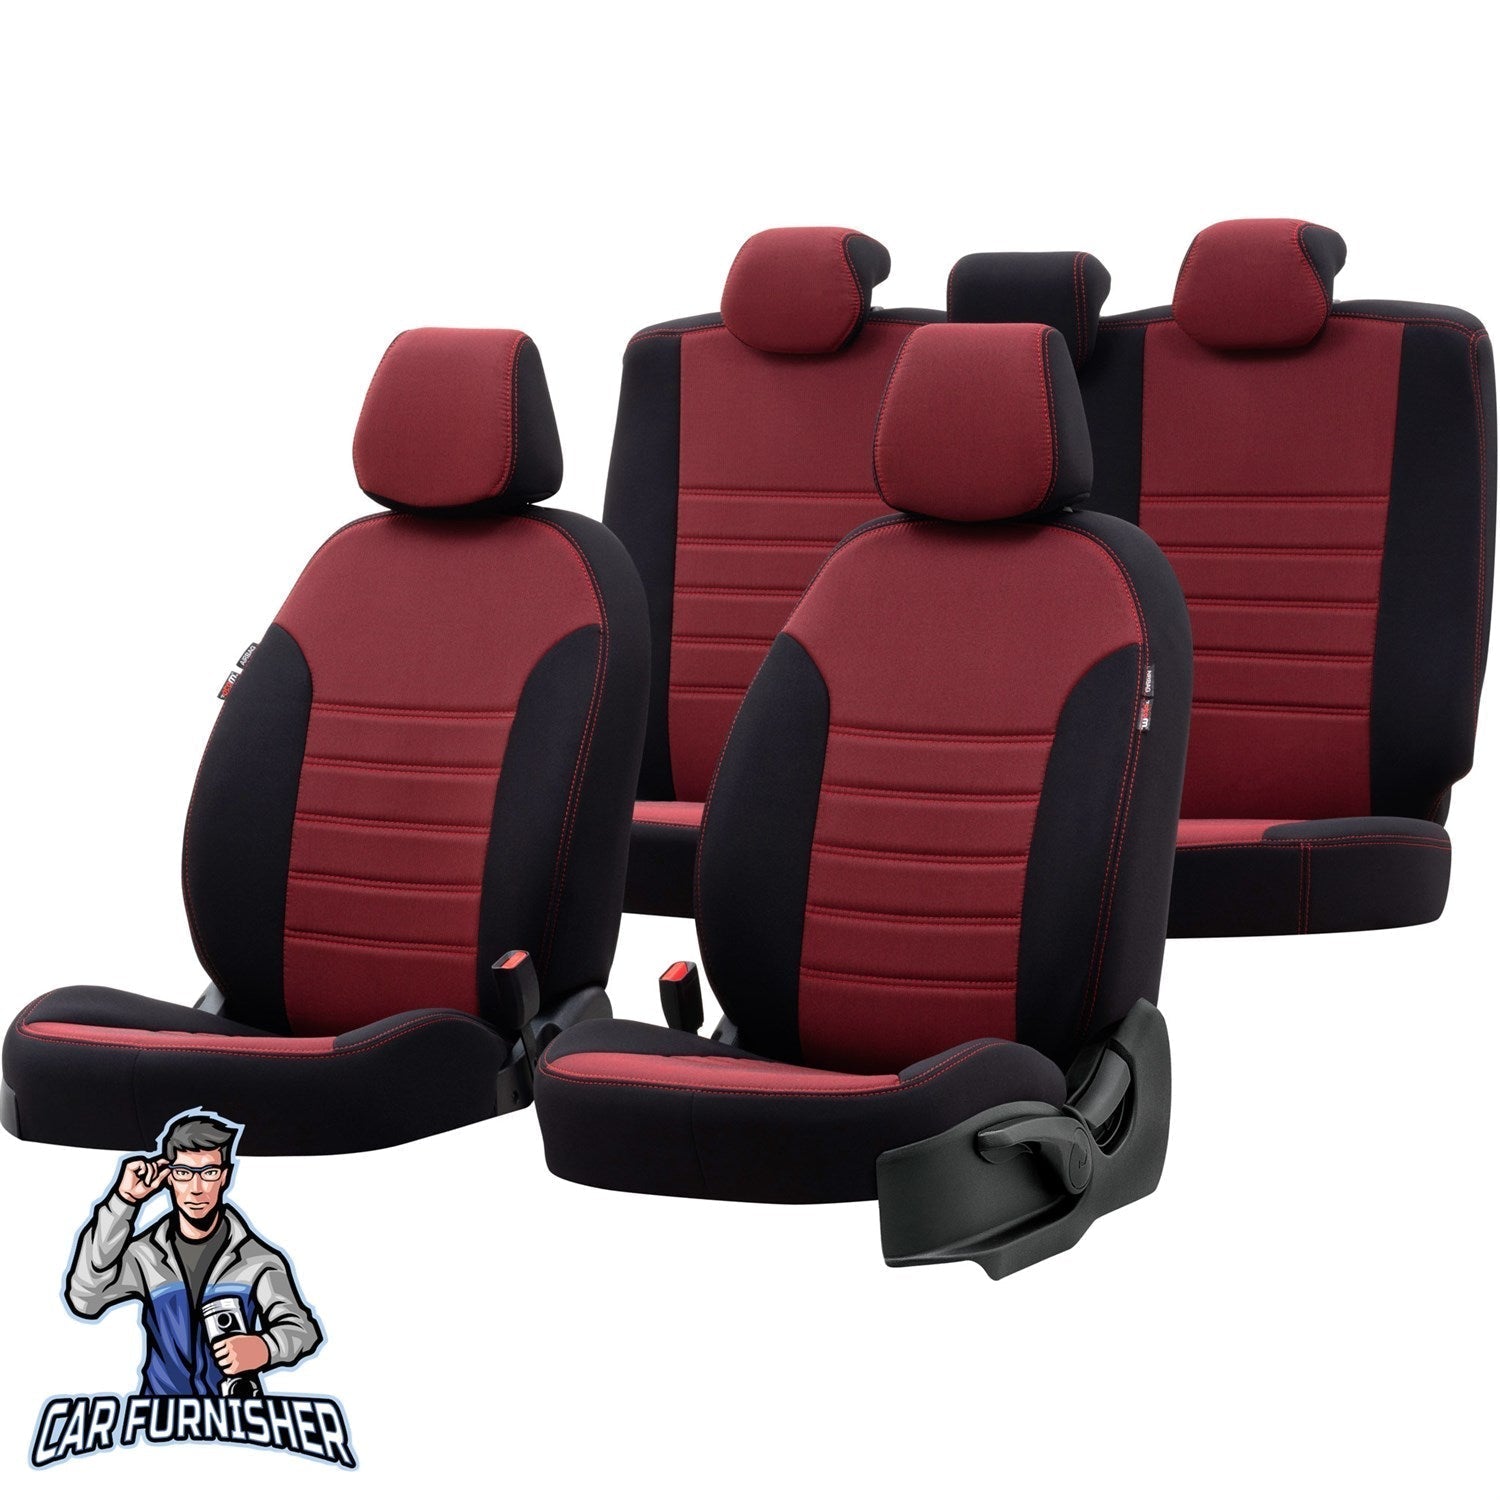 Renault Twingo Seat Cover Original Jacquard Design Red Jacquard Fabric